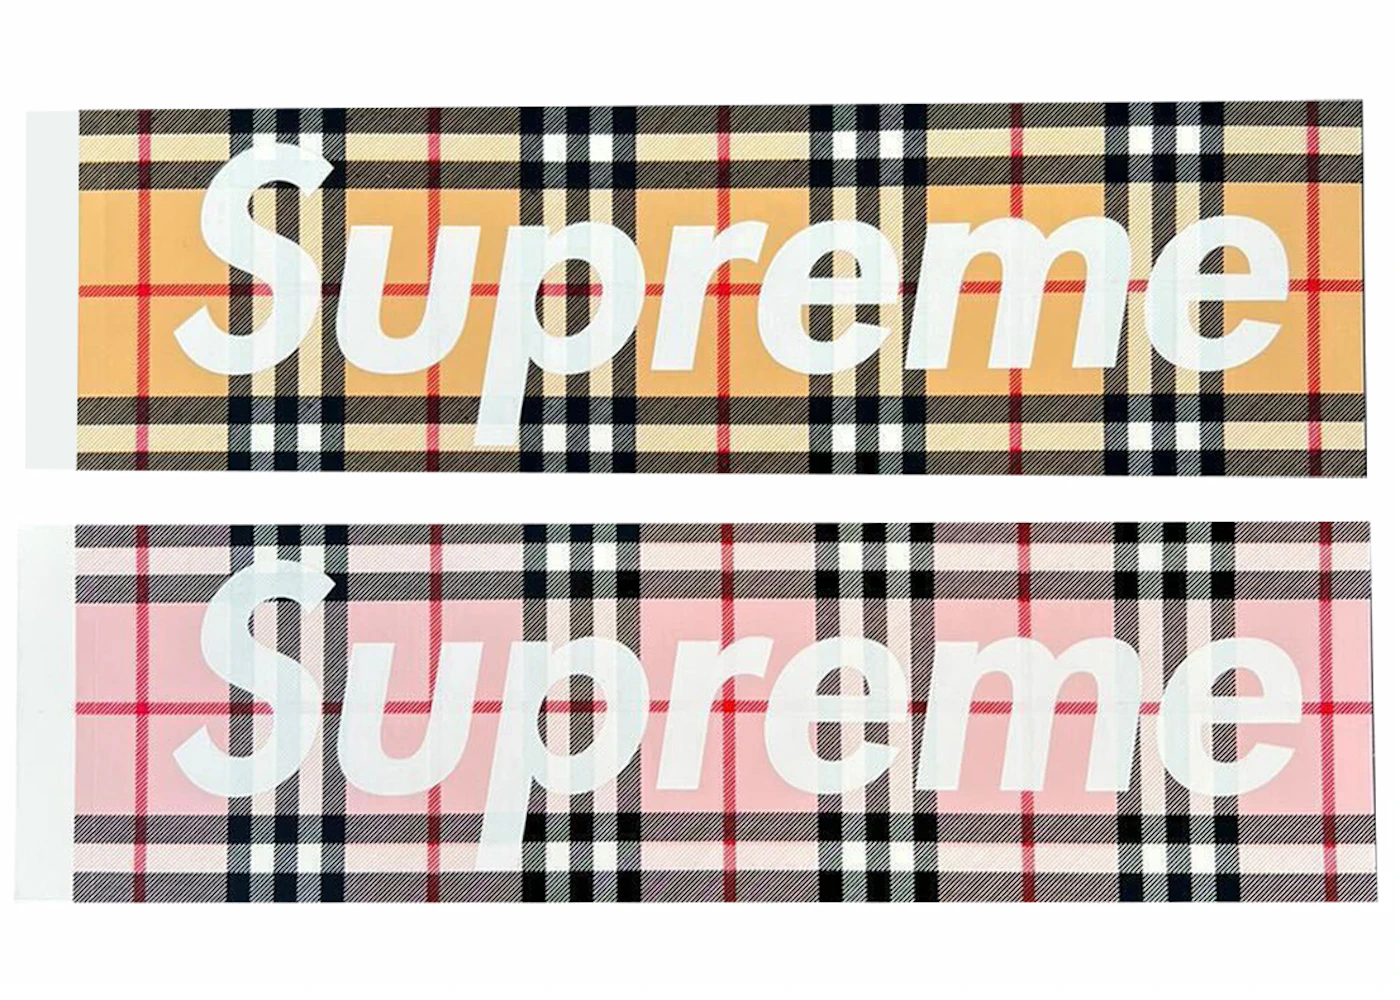 Supreme x Burberry box logo tee